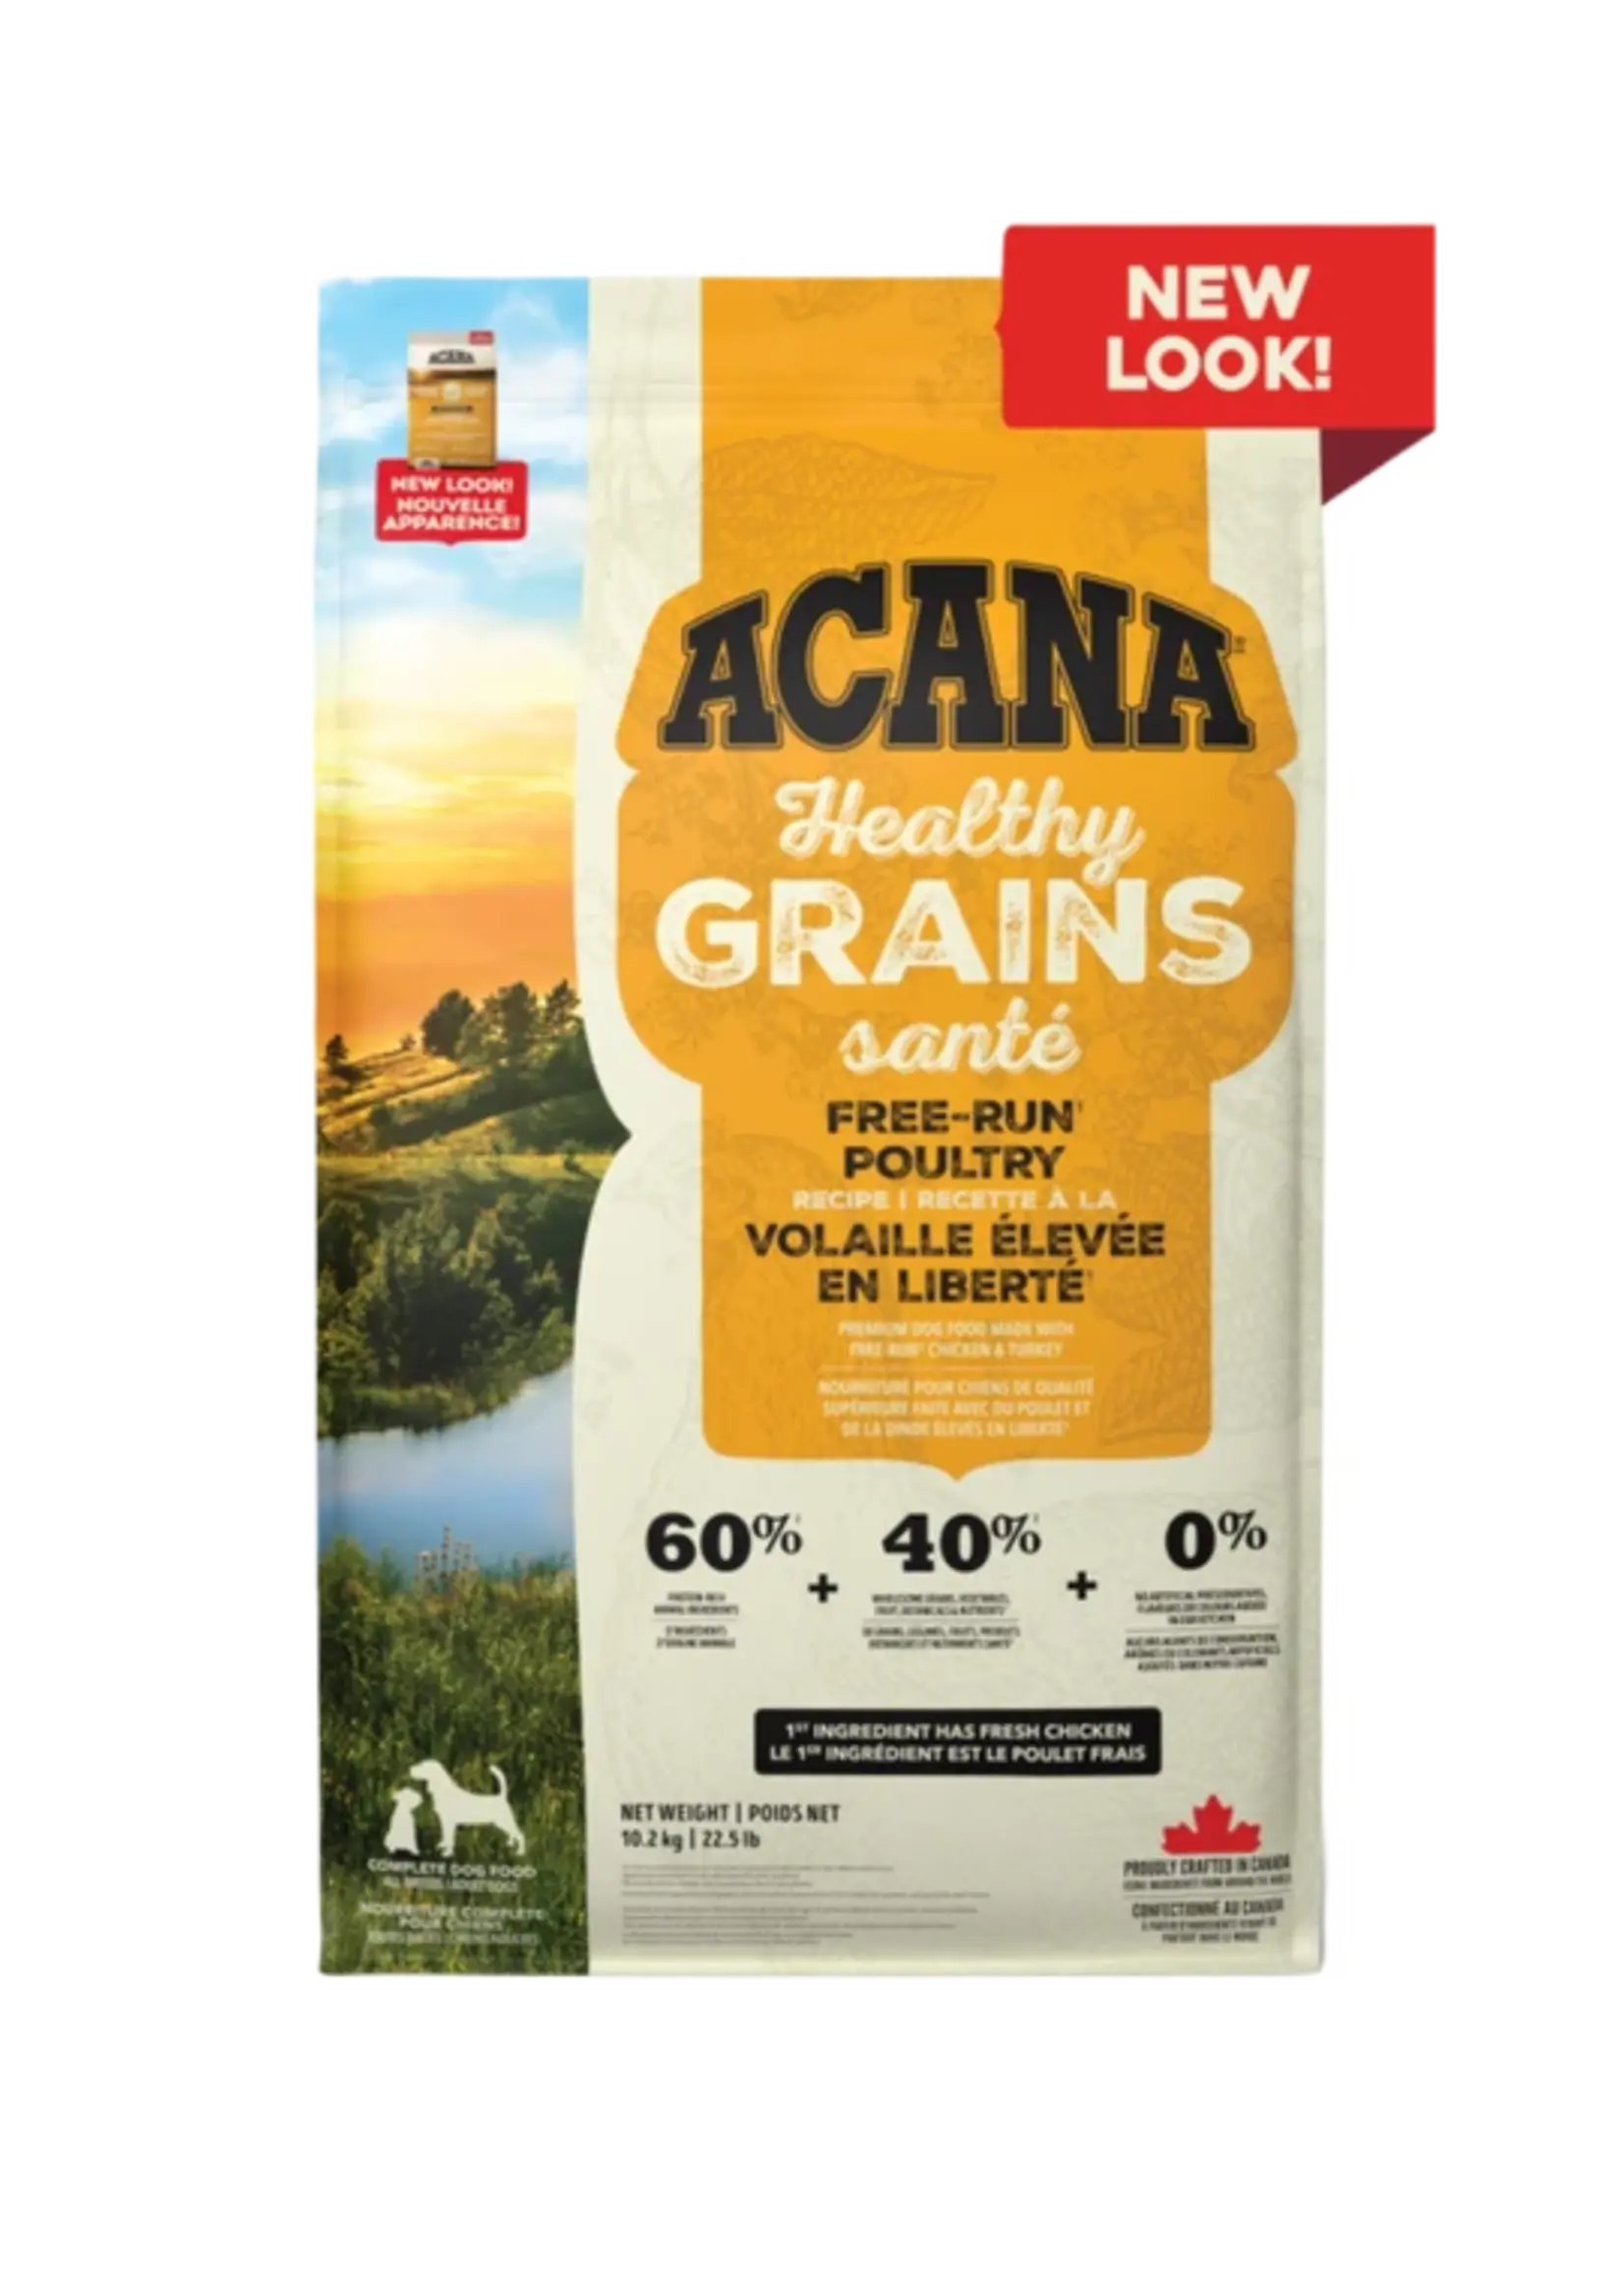 Acana Acana - Healthy Grain Free-Run Poultry Dog